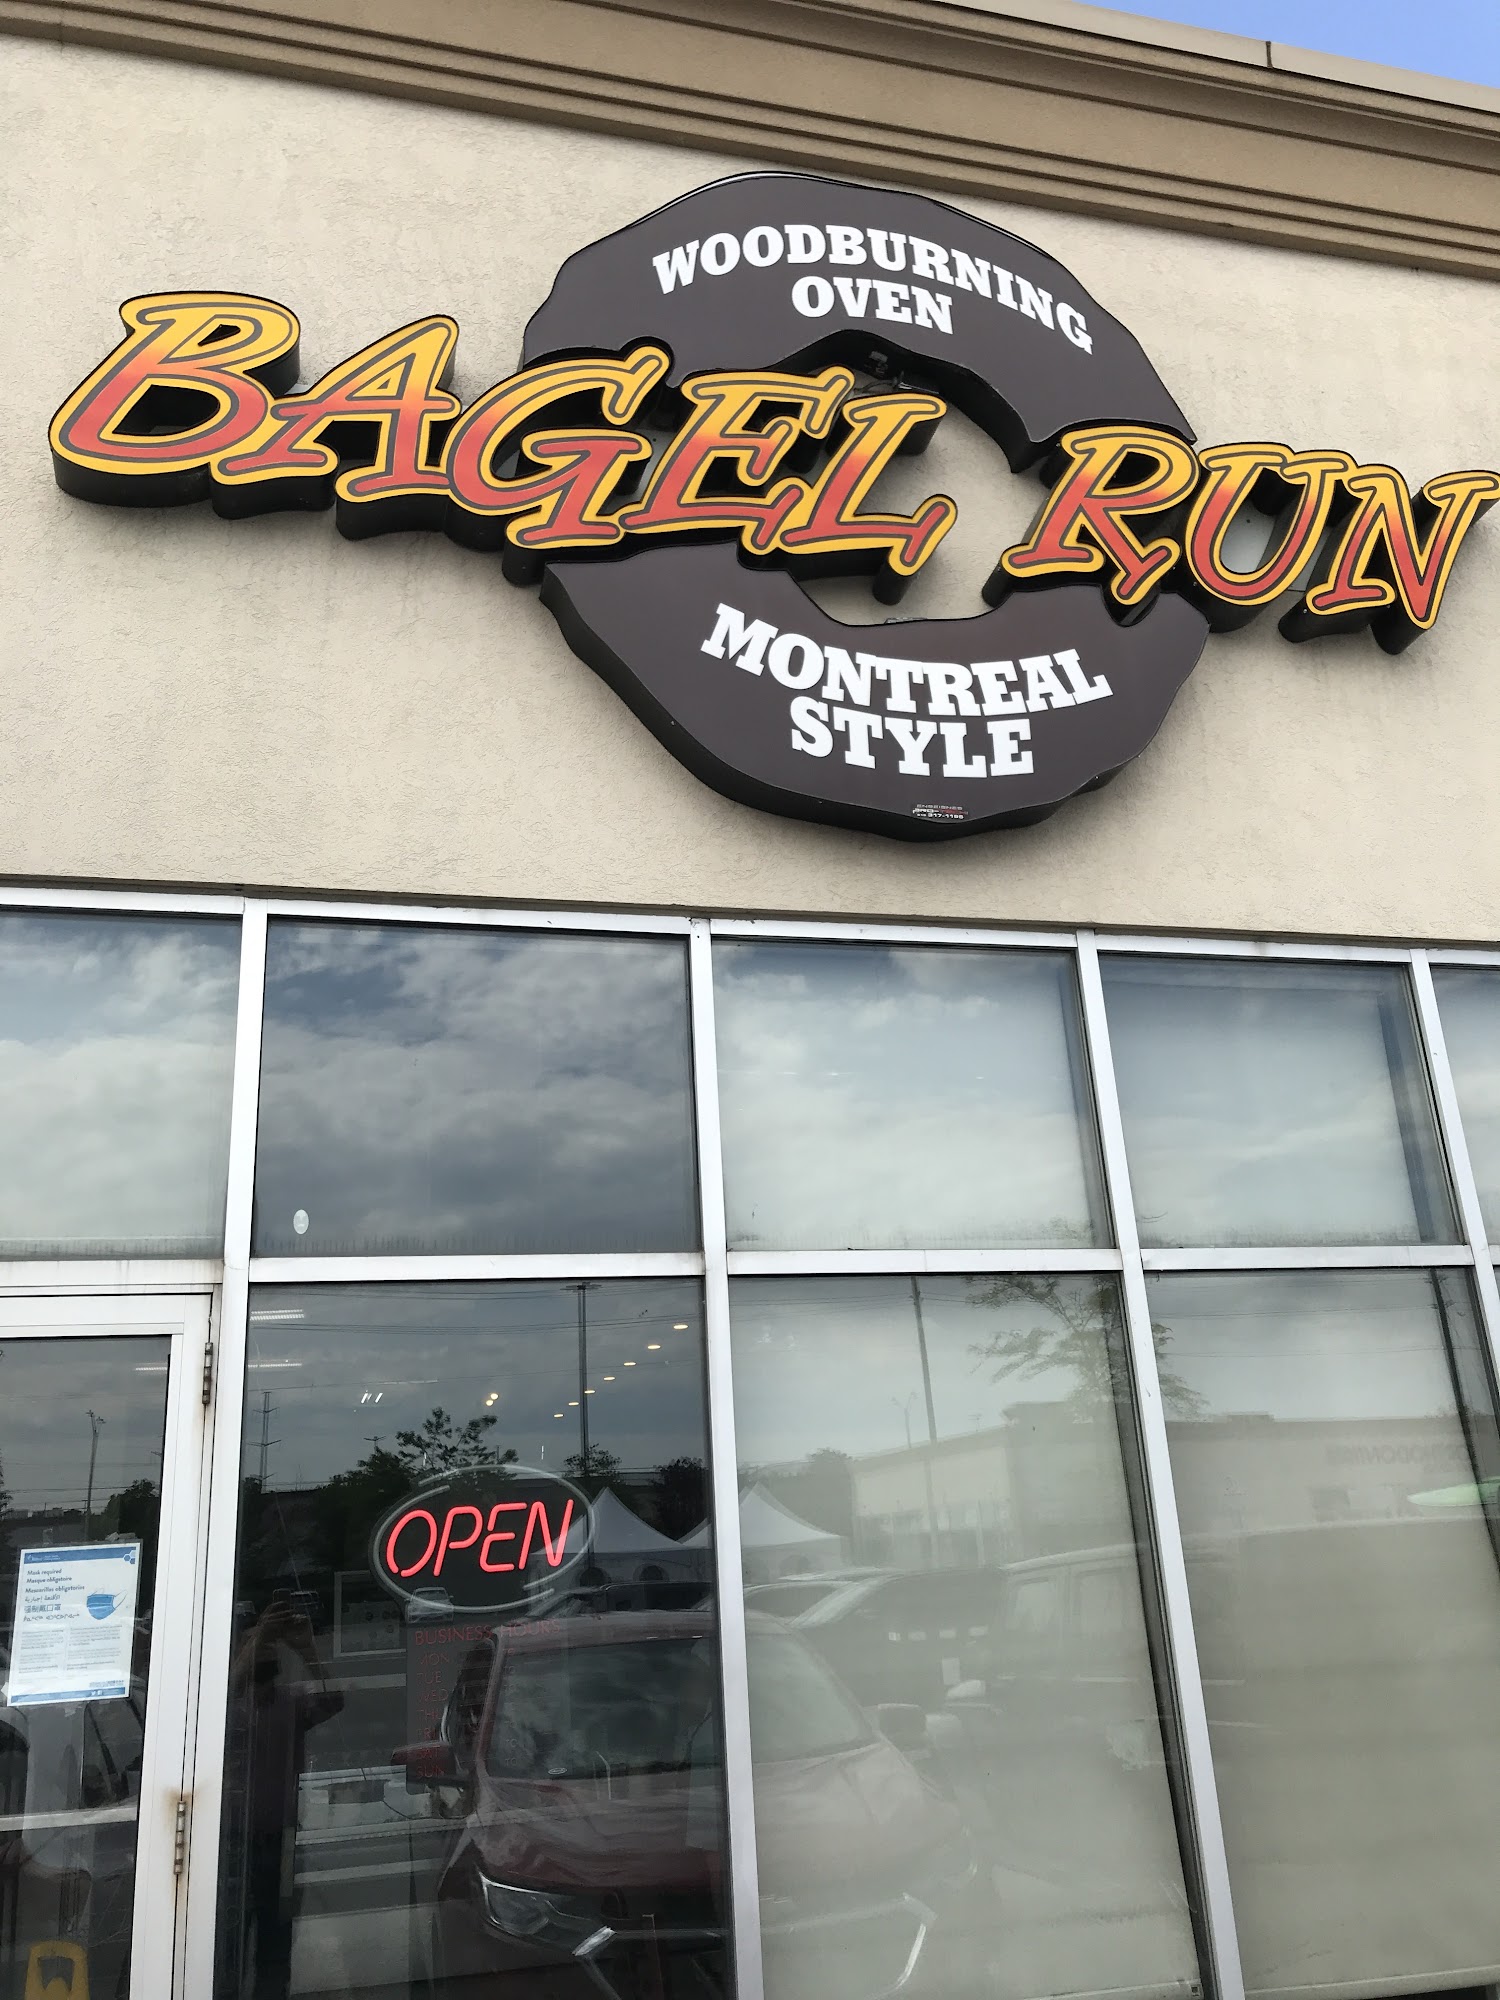 The Bagel Run